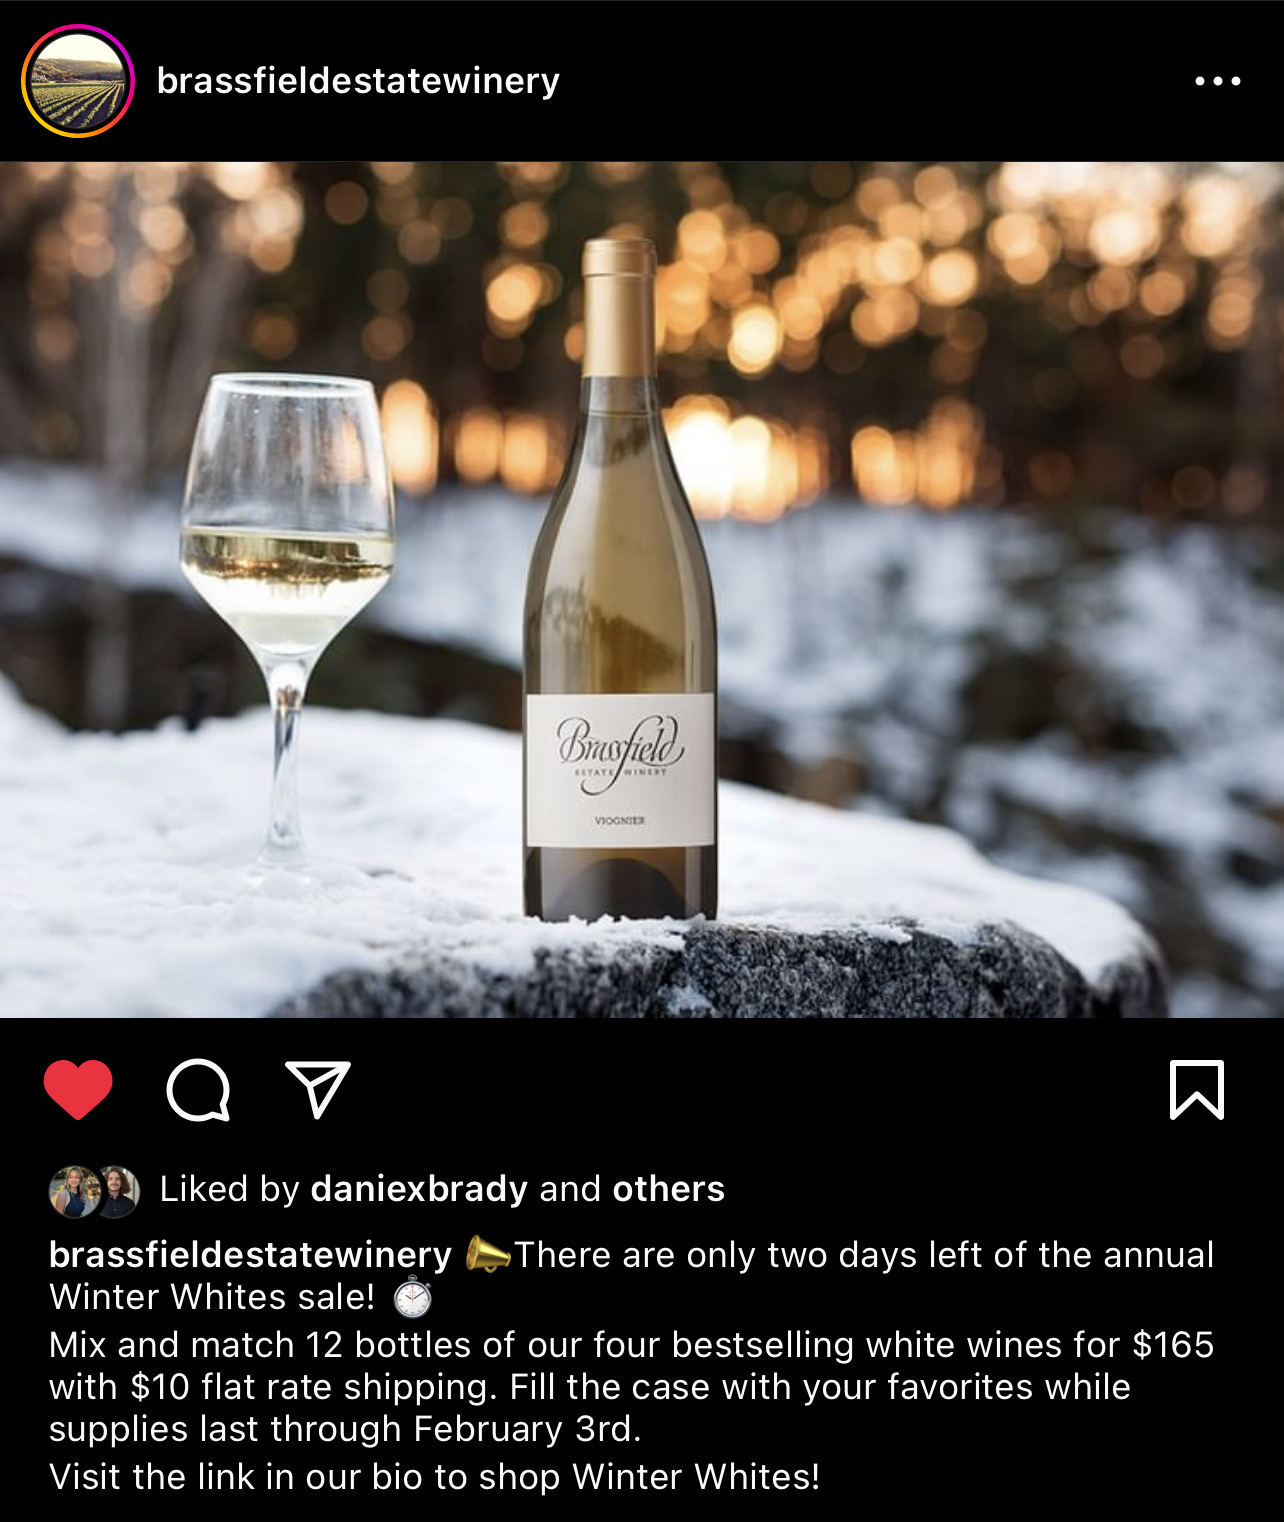 Brassfield Wine Instagram post example showing a beauty shot of wine